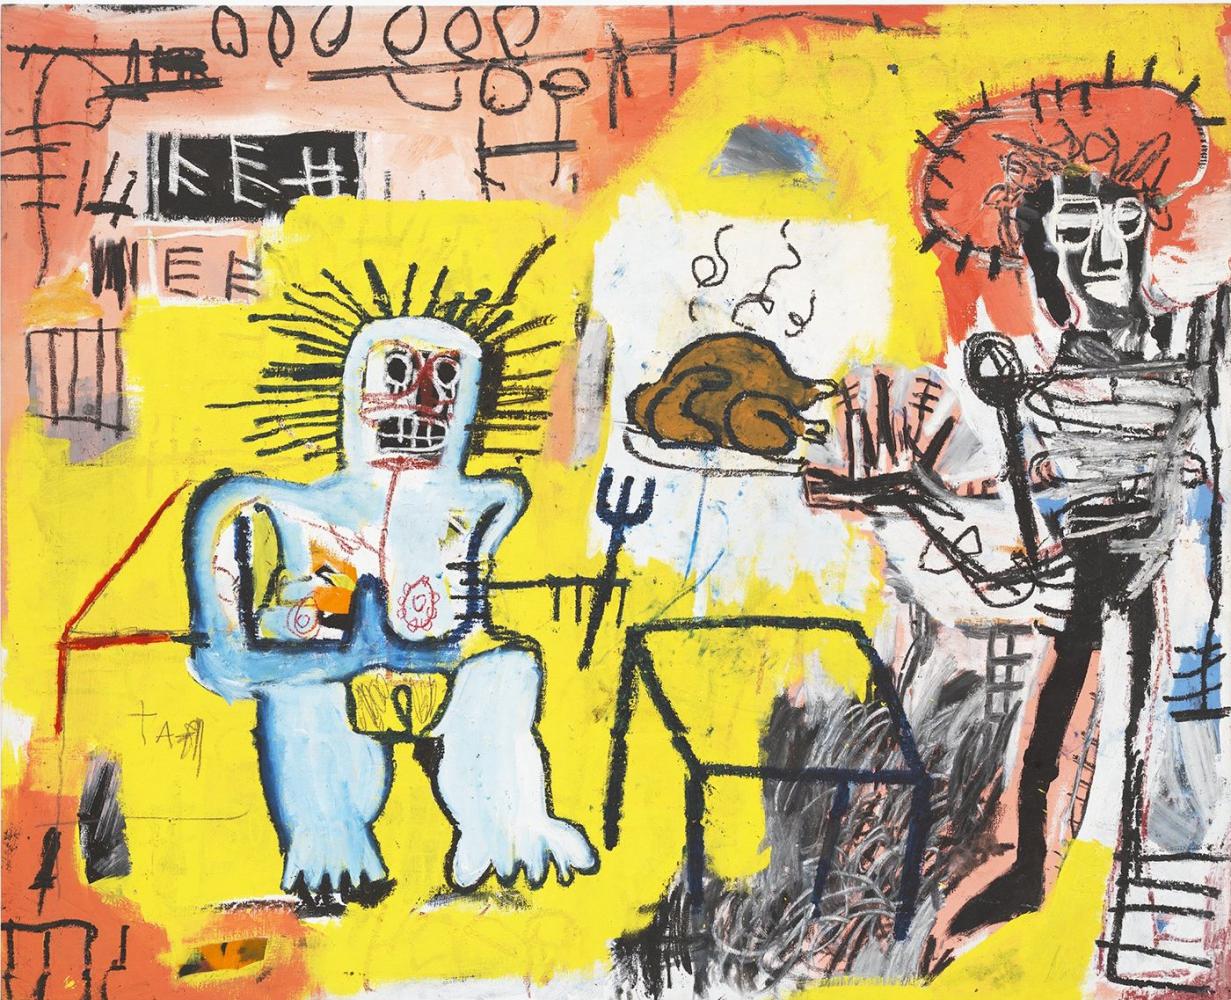 Foto: -/Estate of Jean Michel Basquiat. Licensed by Artestar, New York/dpa